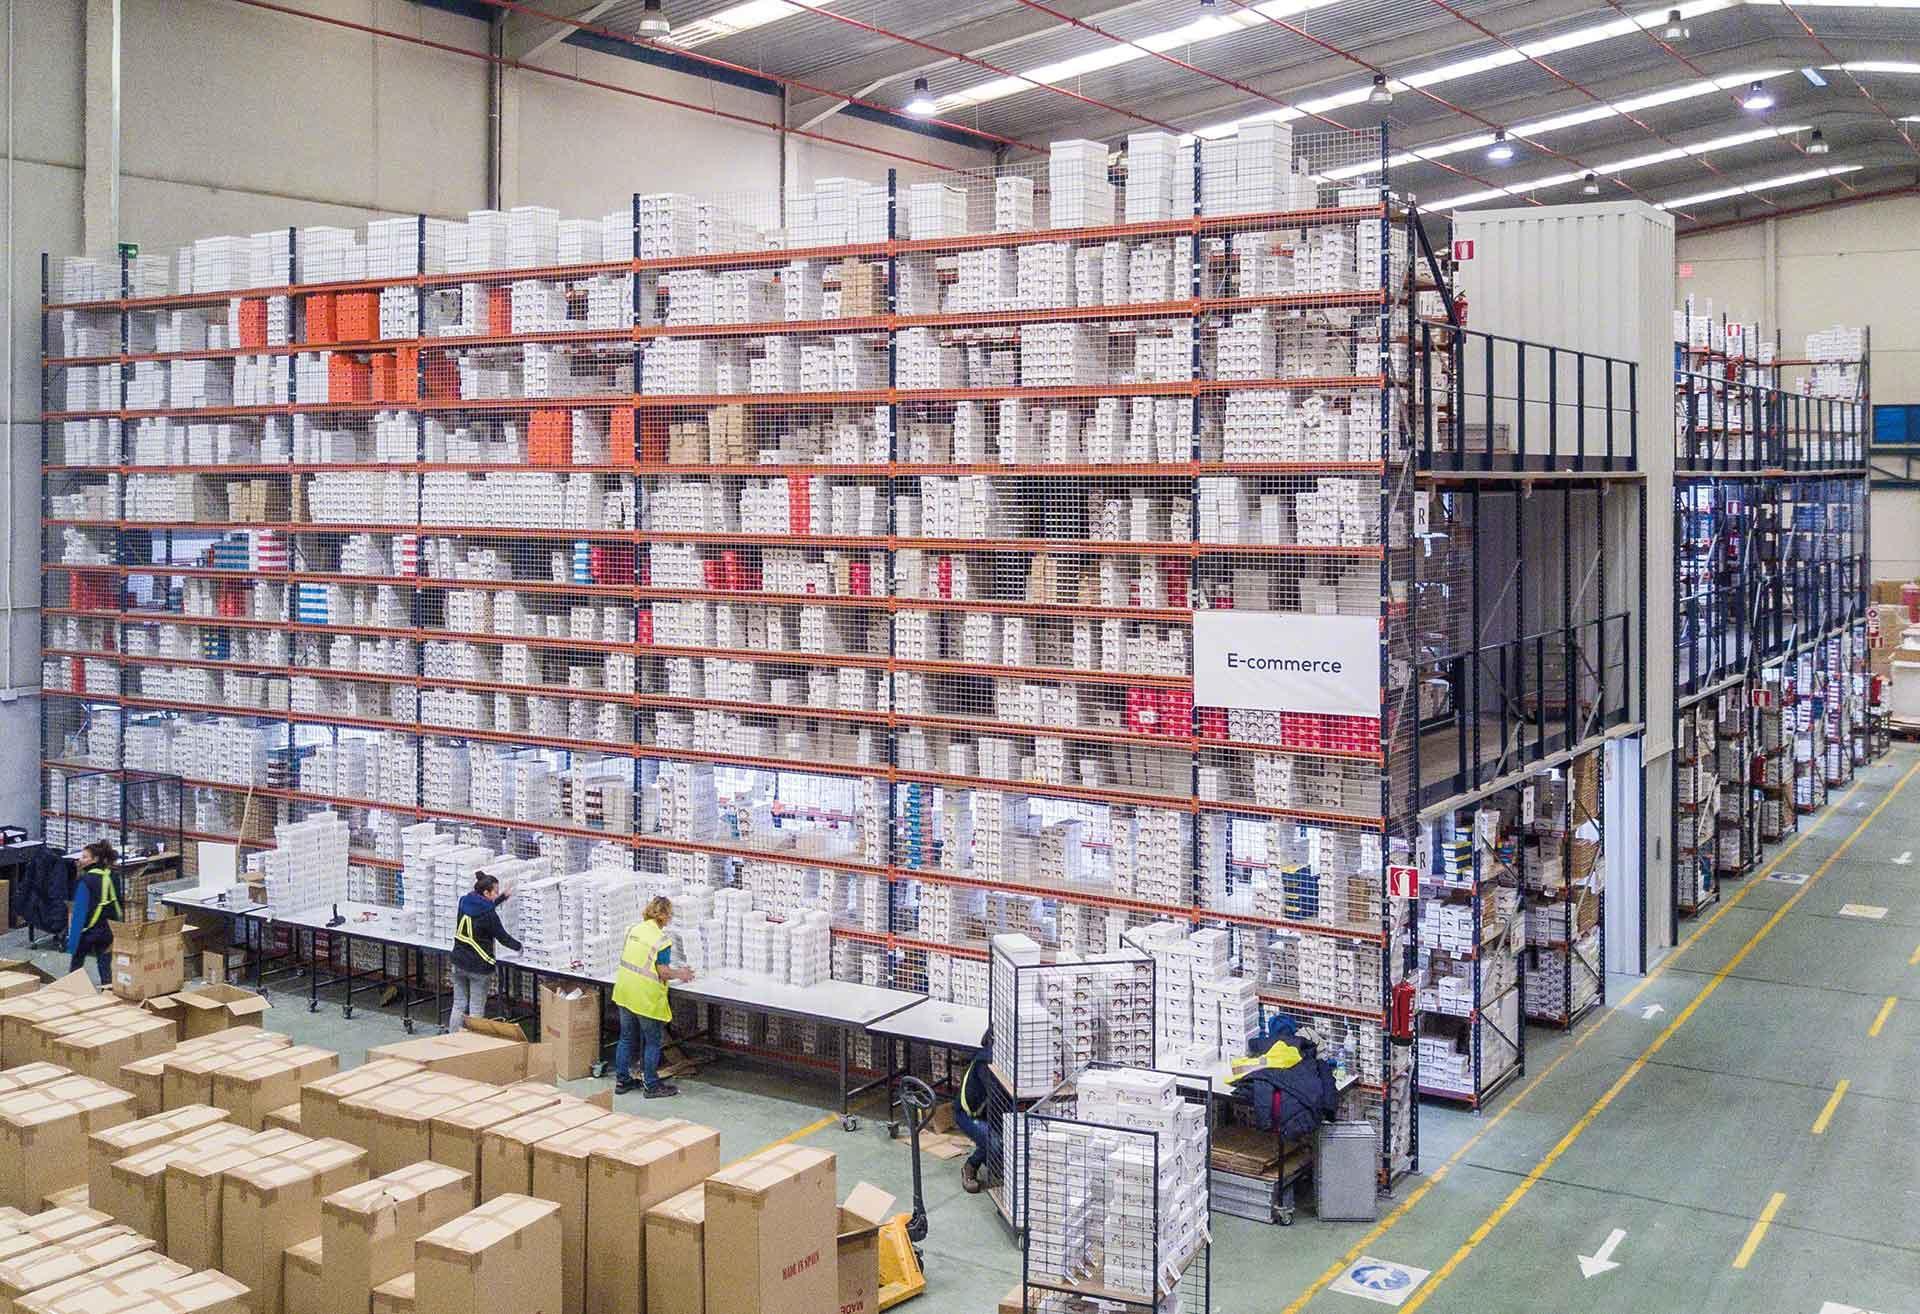 Walkways between racking units optimise warehouse space